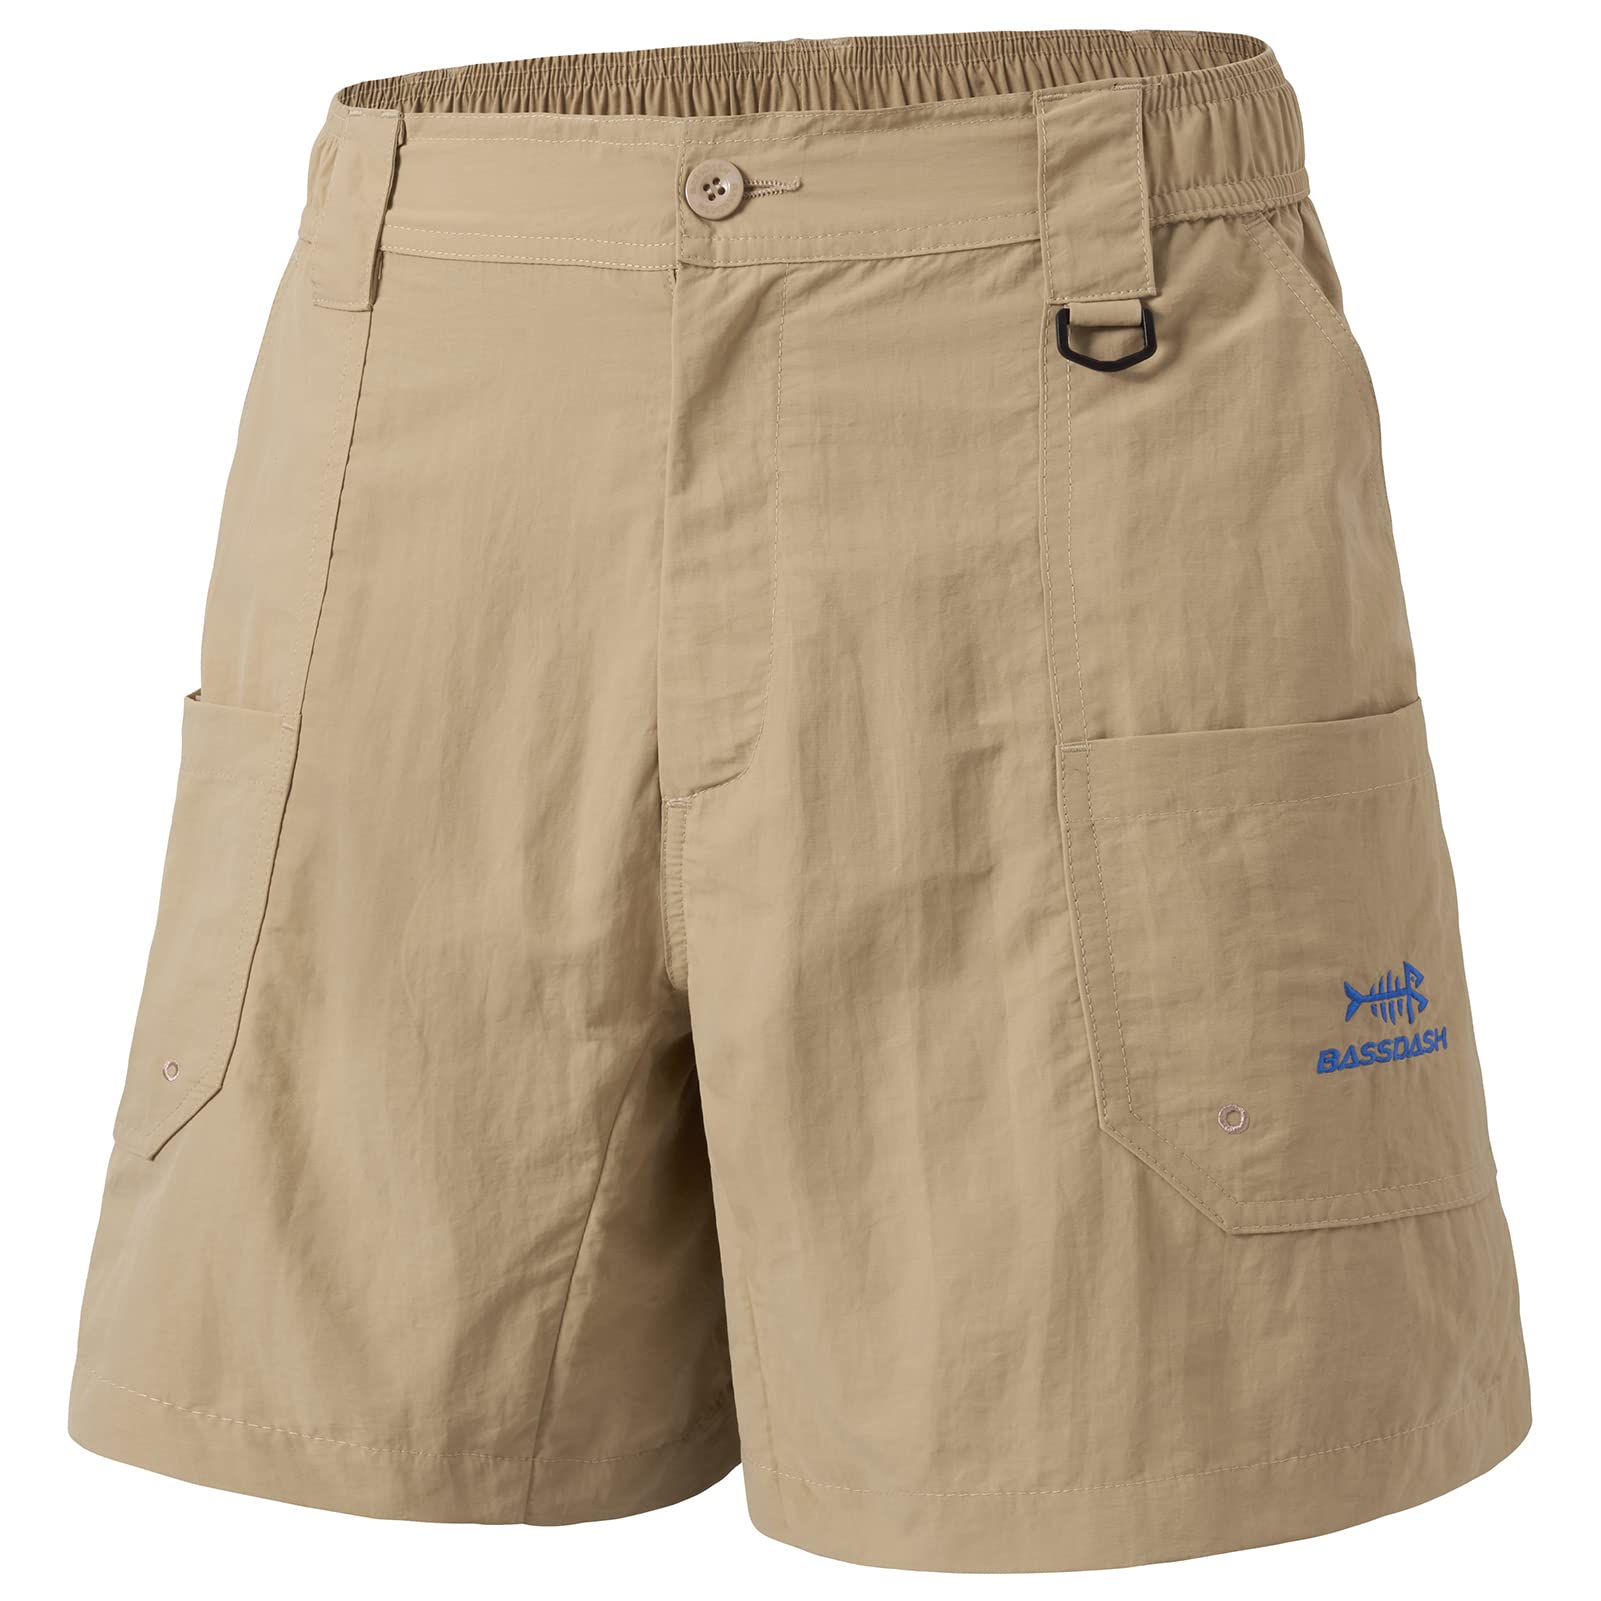 BASSDASH Men's 6 Fishing Shorts UPF 50+ Water Resistant Quick Dry Hiking  Cargo Shorts with Multi Pocket FP03M Khaki Large